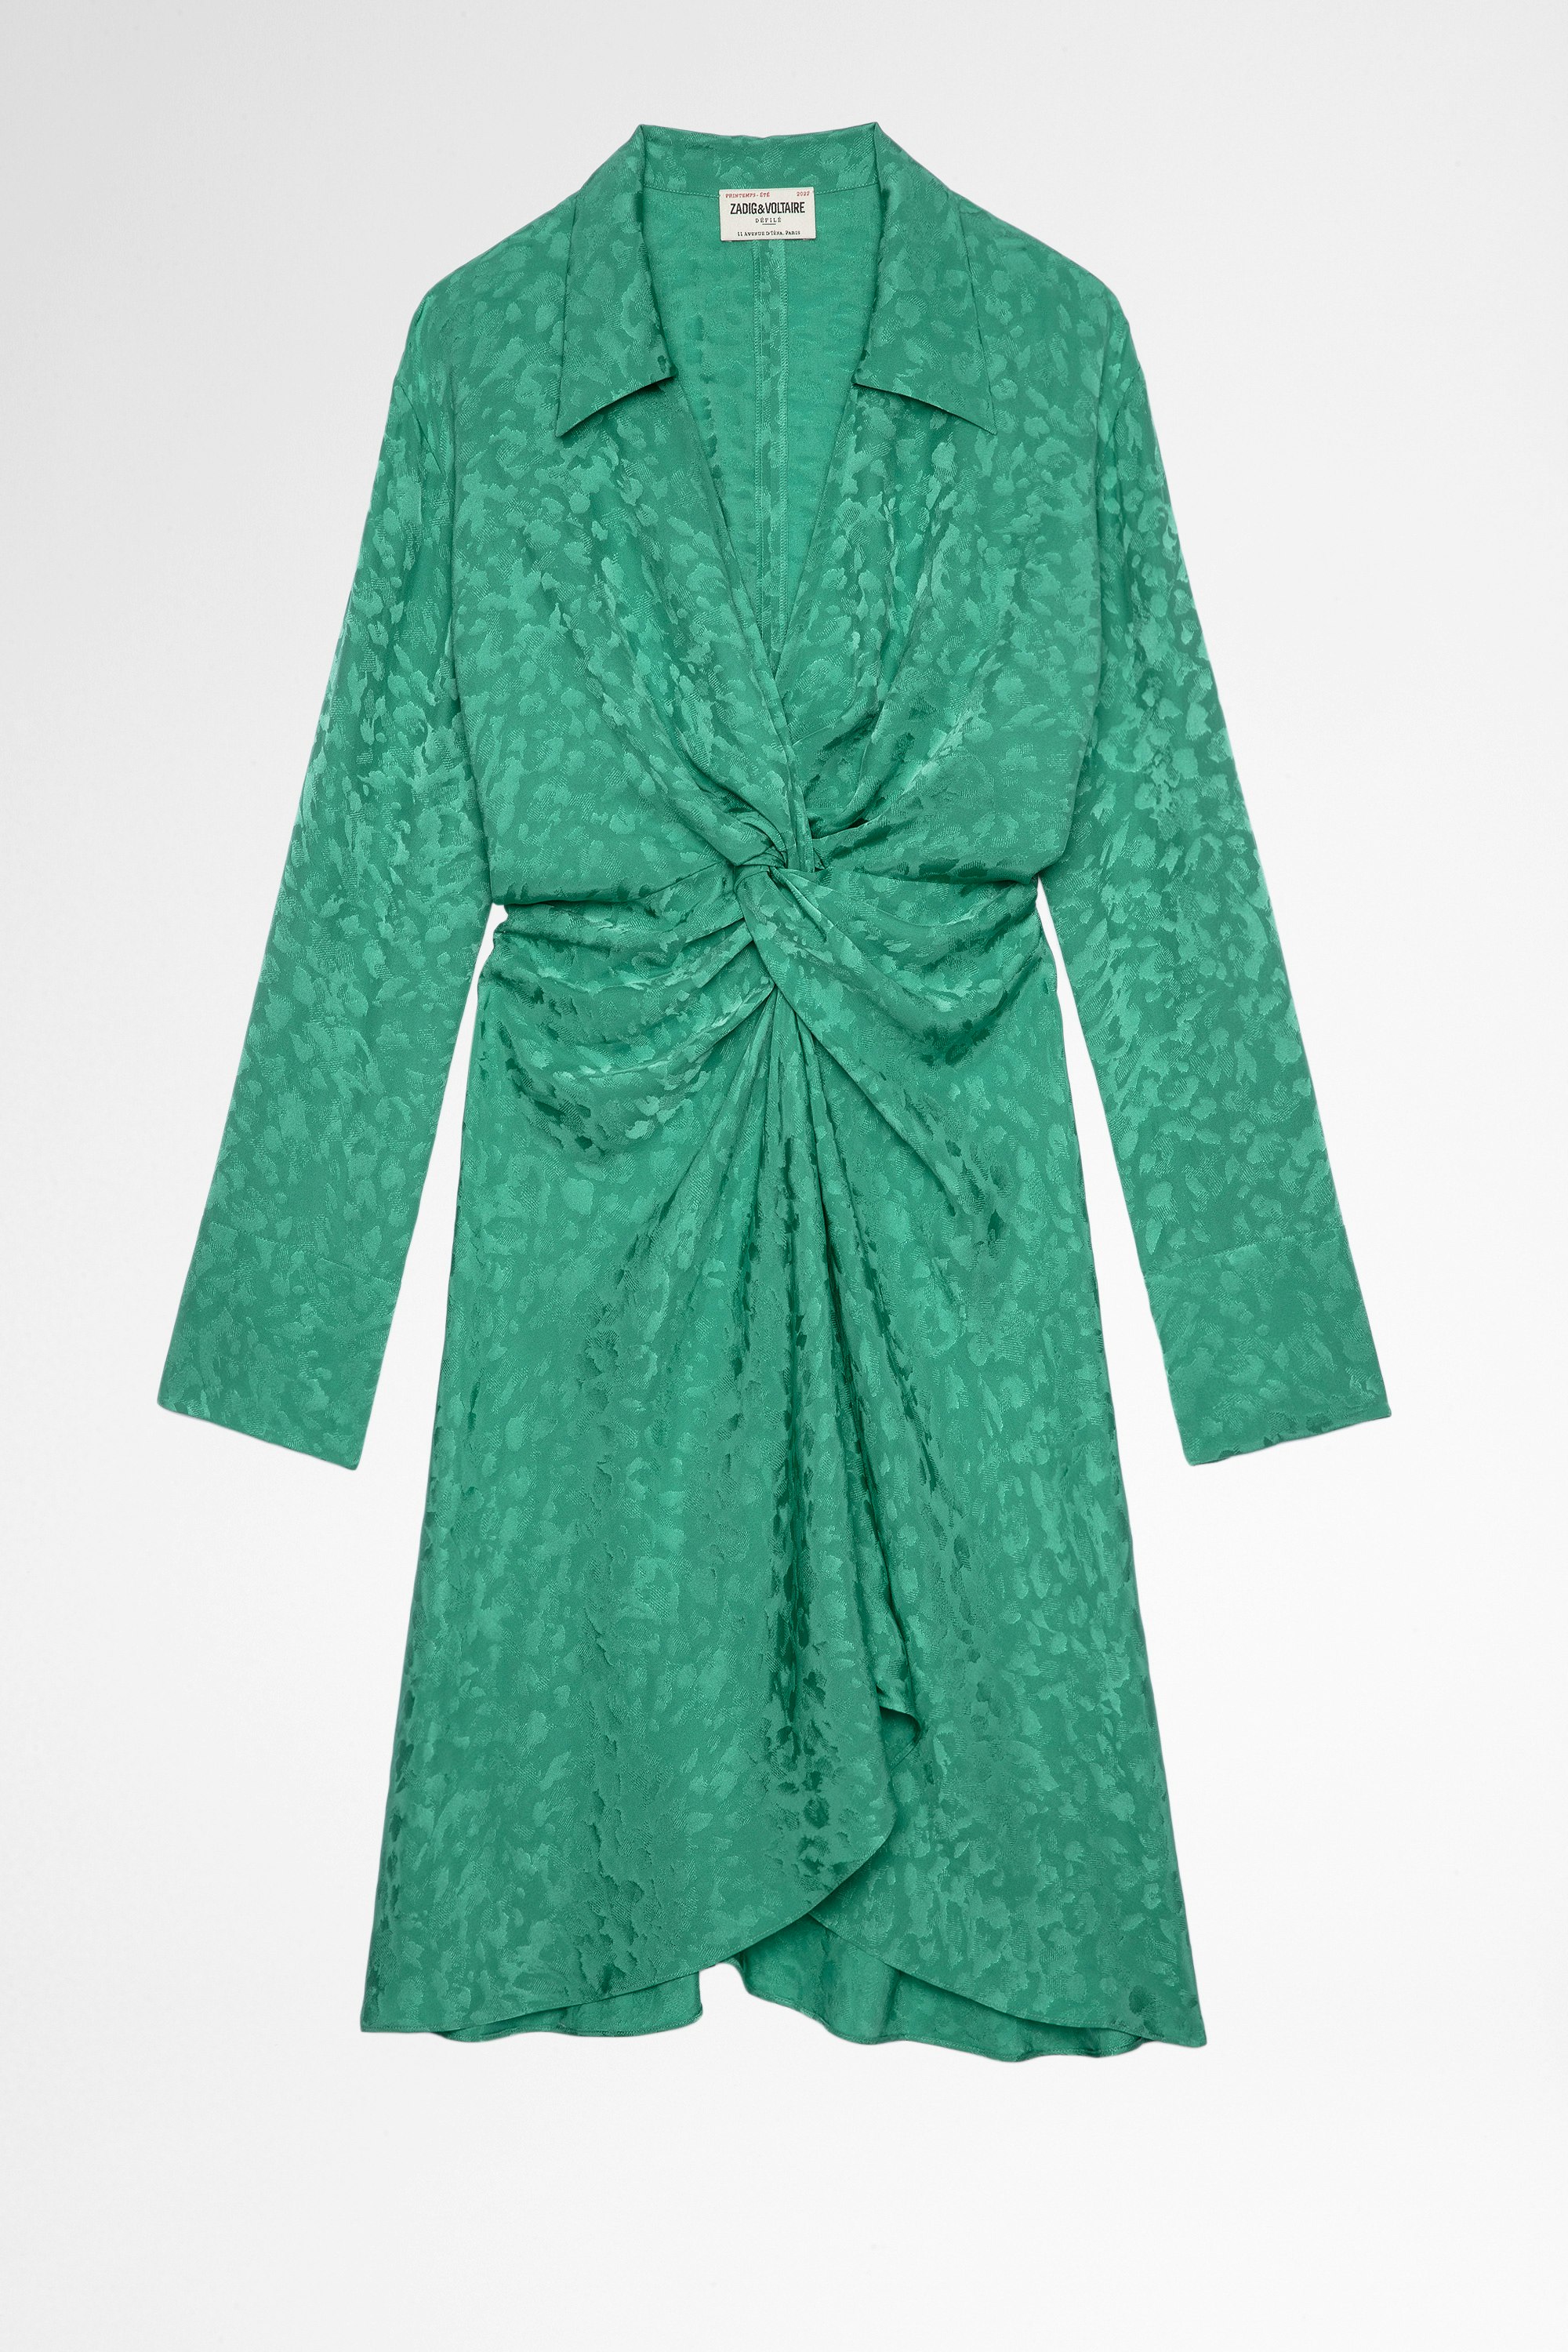 Rozo シルク ドレス Women's draped dress in leopard print silk jacquard